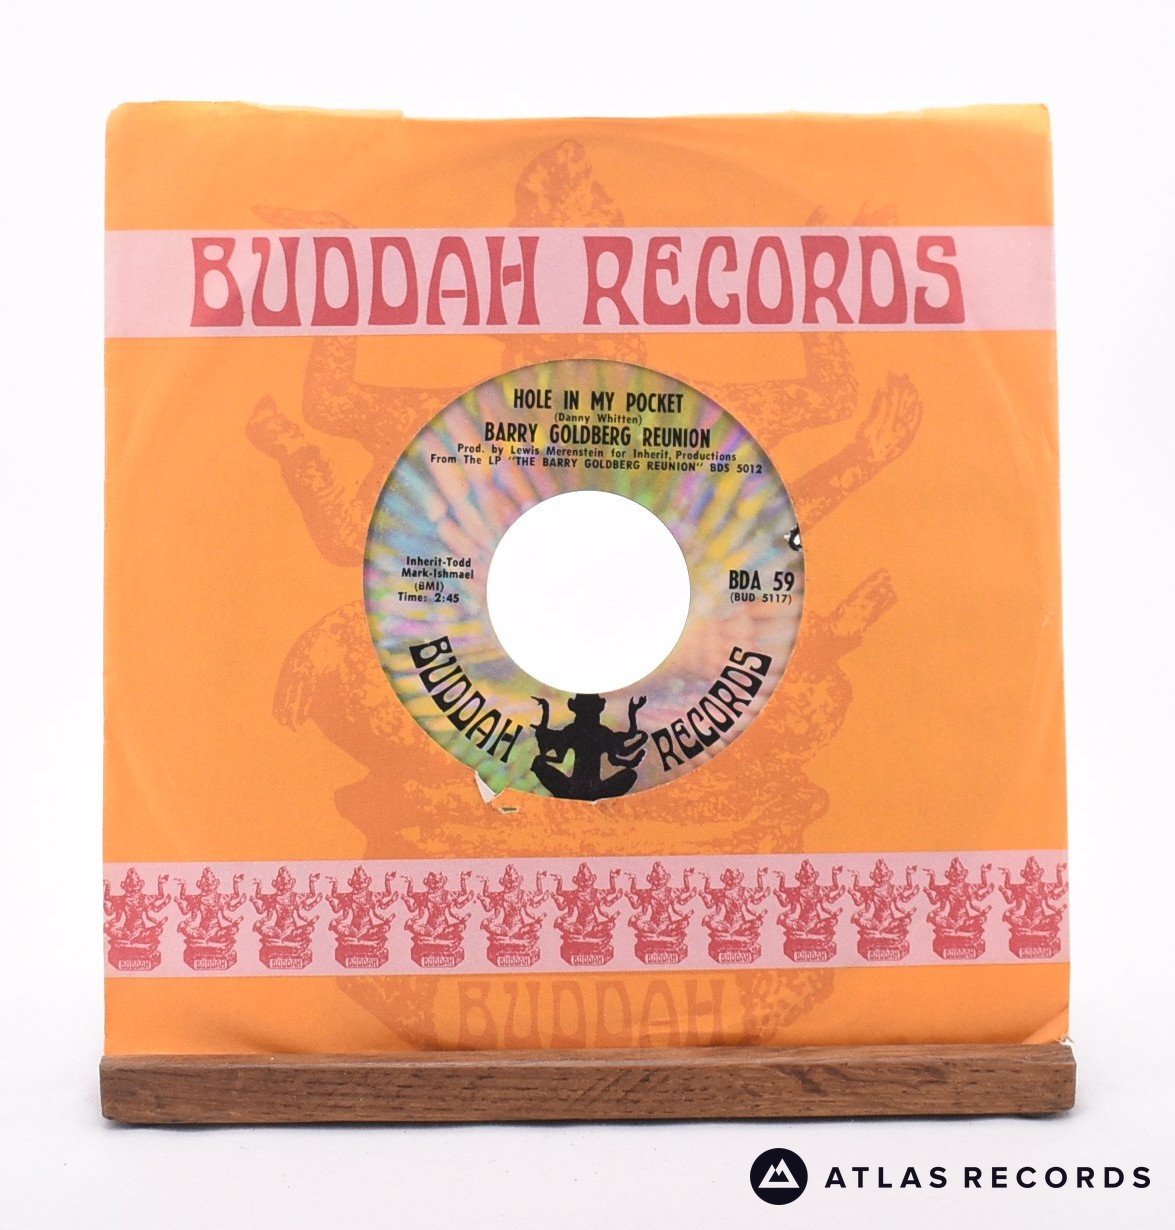 Barry Goldberg Reunion Hole In My Pocket 7" Vinyl Record - In Sleeve